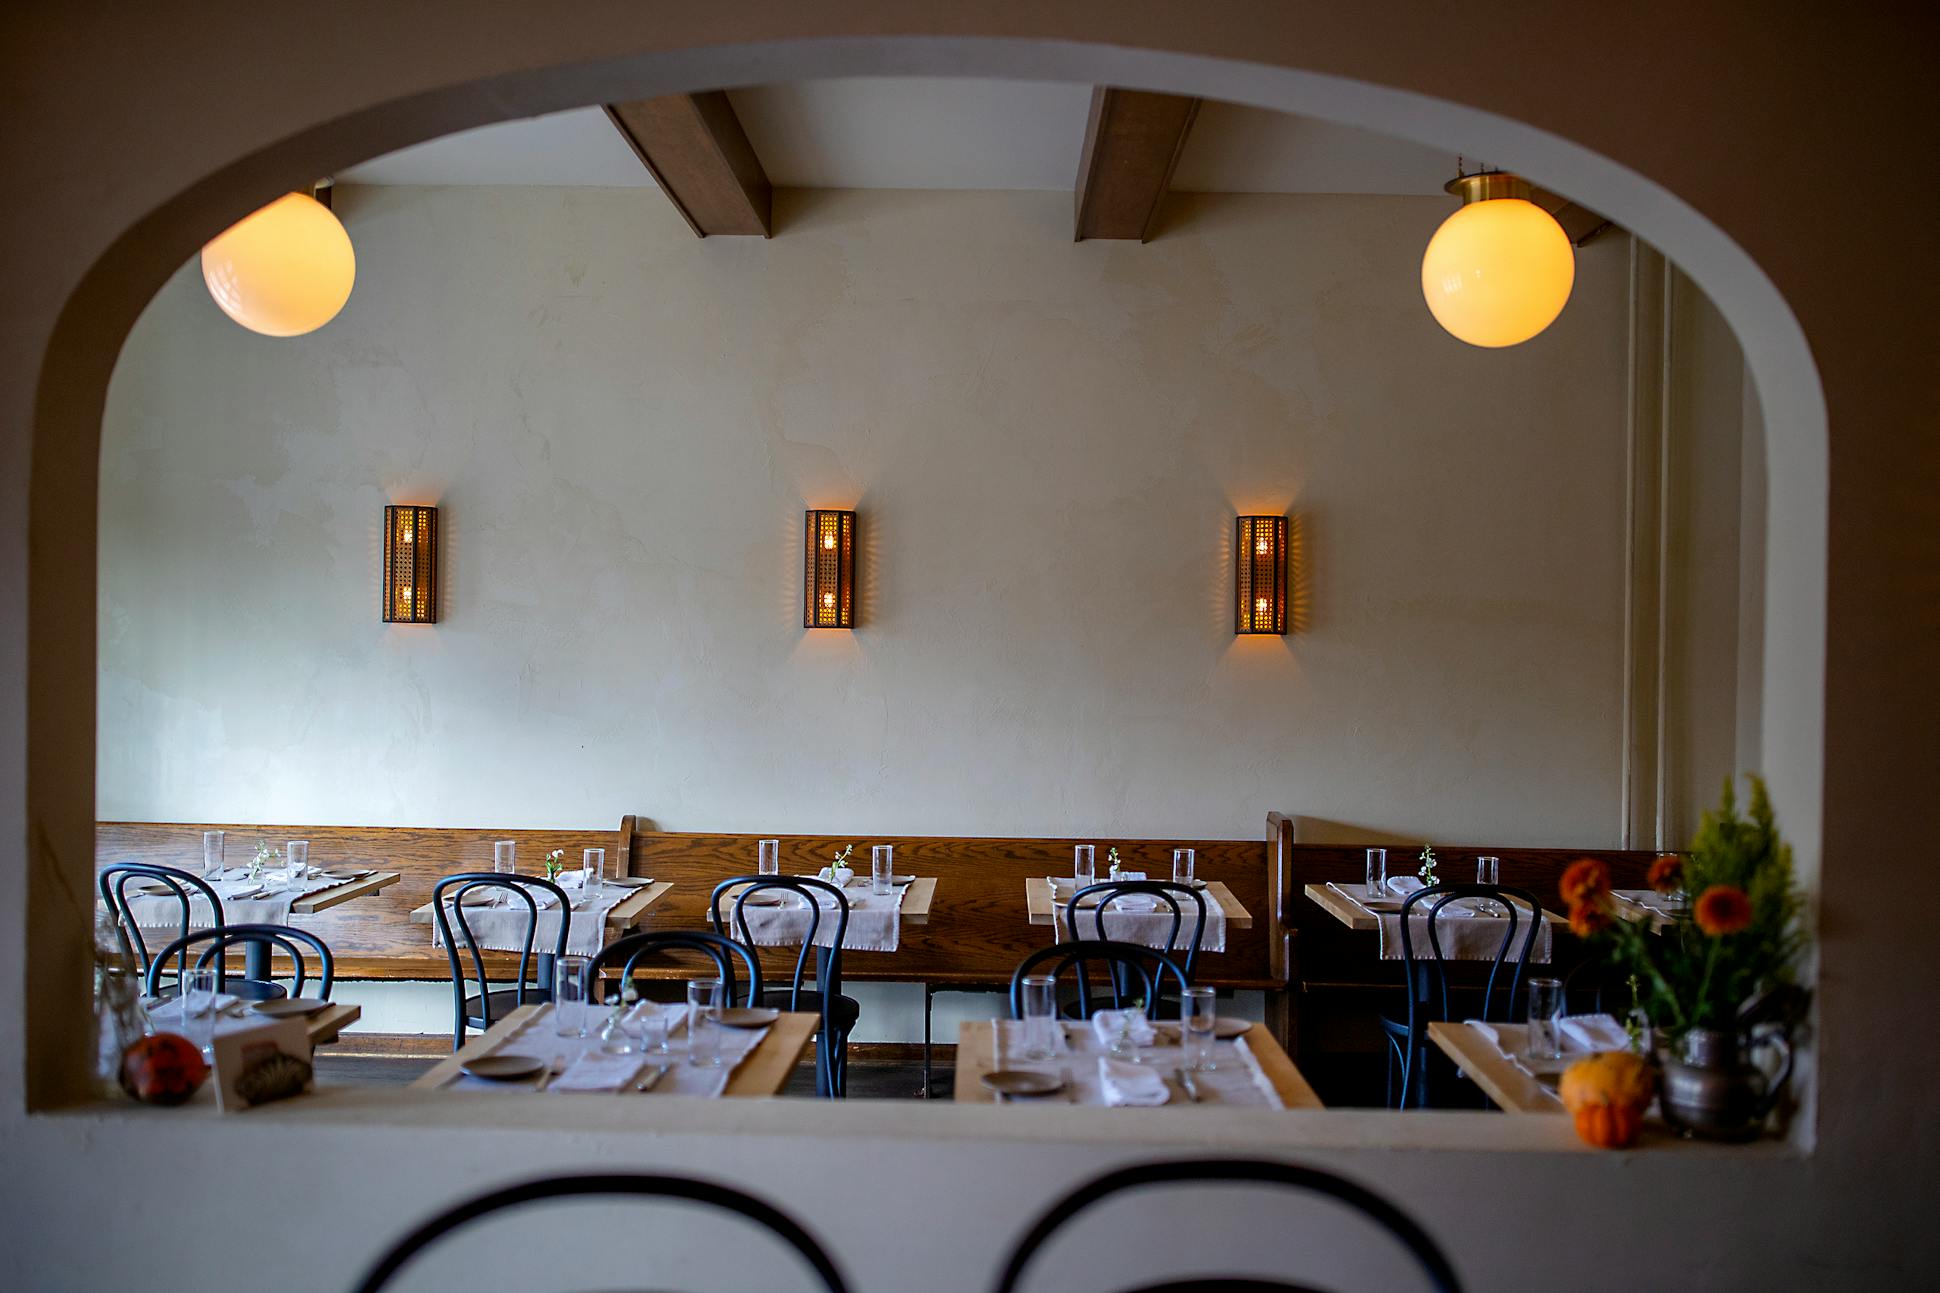 A cozy dining room helps make Myriel a neighborhood gem.